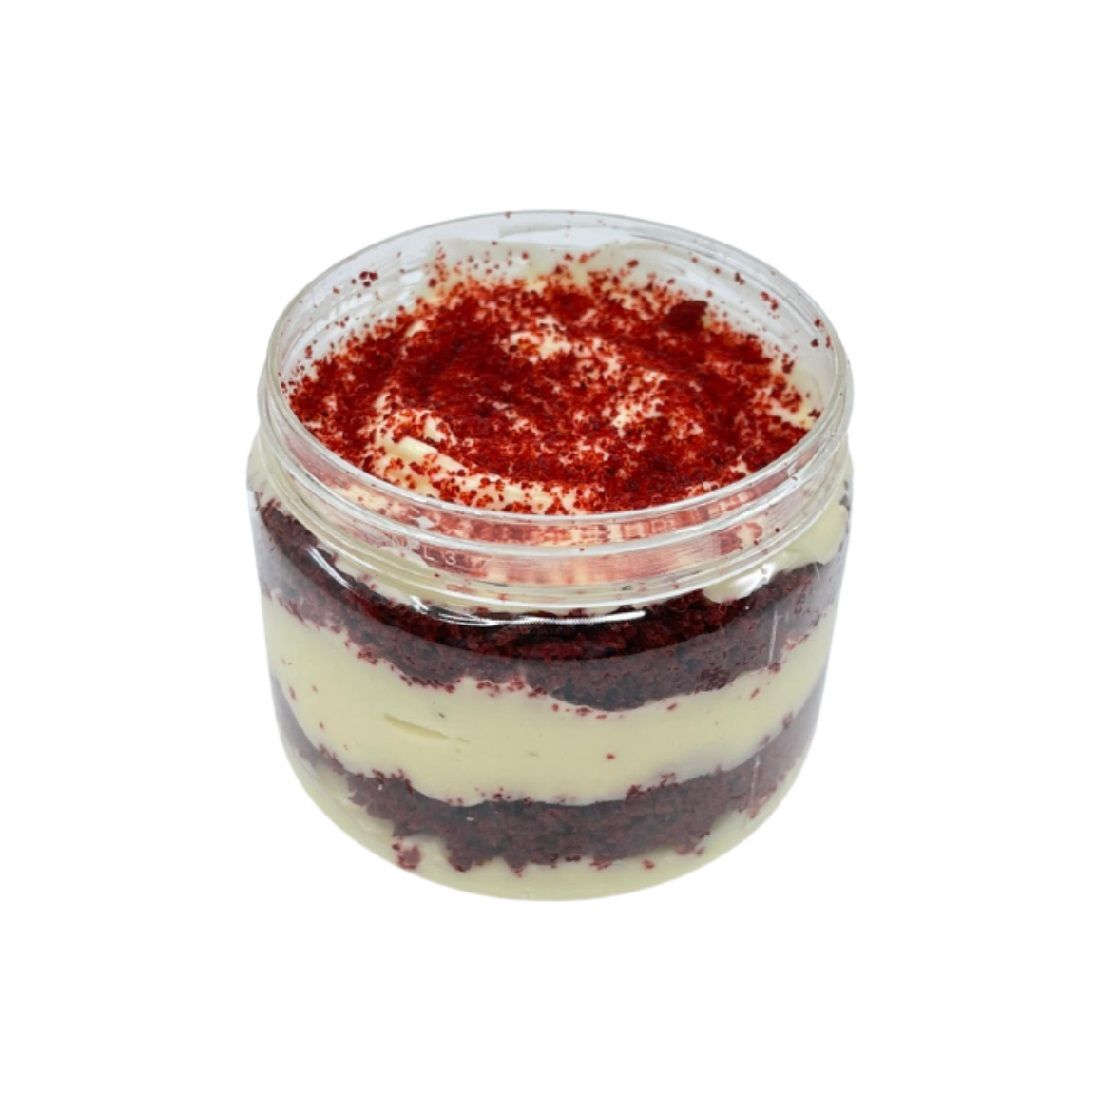 Red Velvety Jar Cake - Buy, Send & Order Online Delivery In India -  Cake2homes